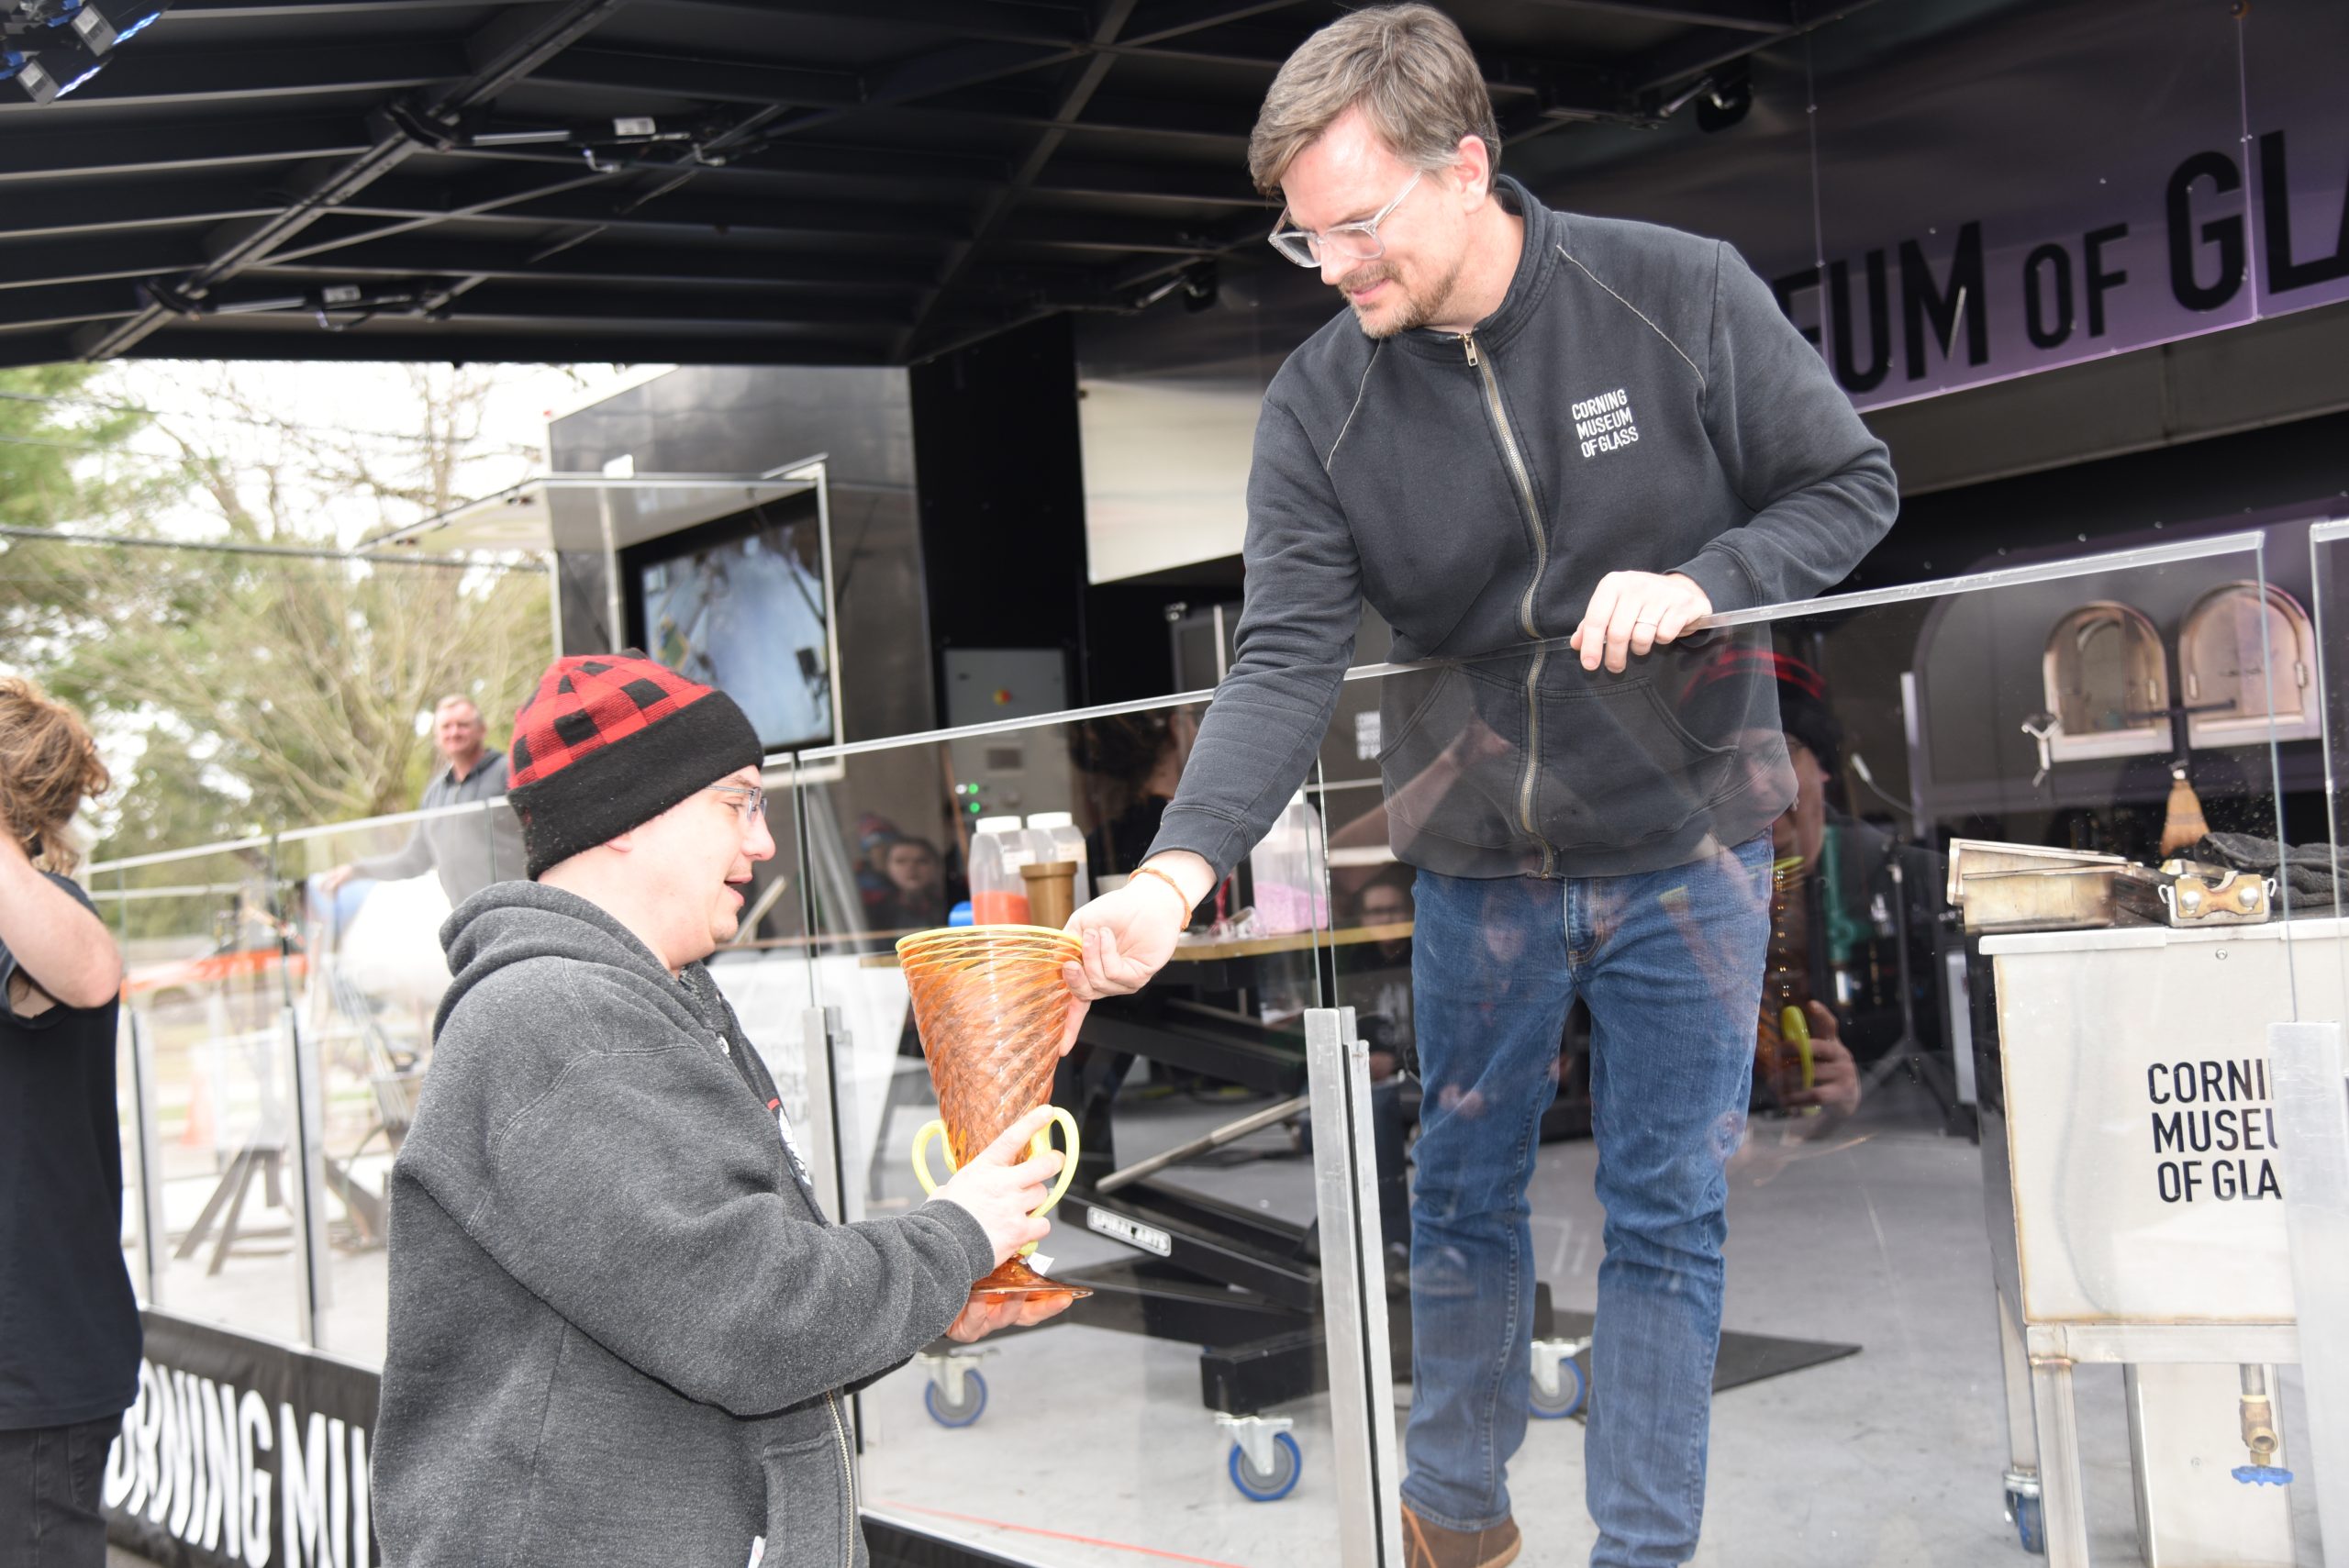 A glassmaker standing on the Mobile Hot Shop stage hands an orange glass vase to a man after a glassmaking demonstration.